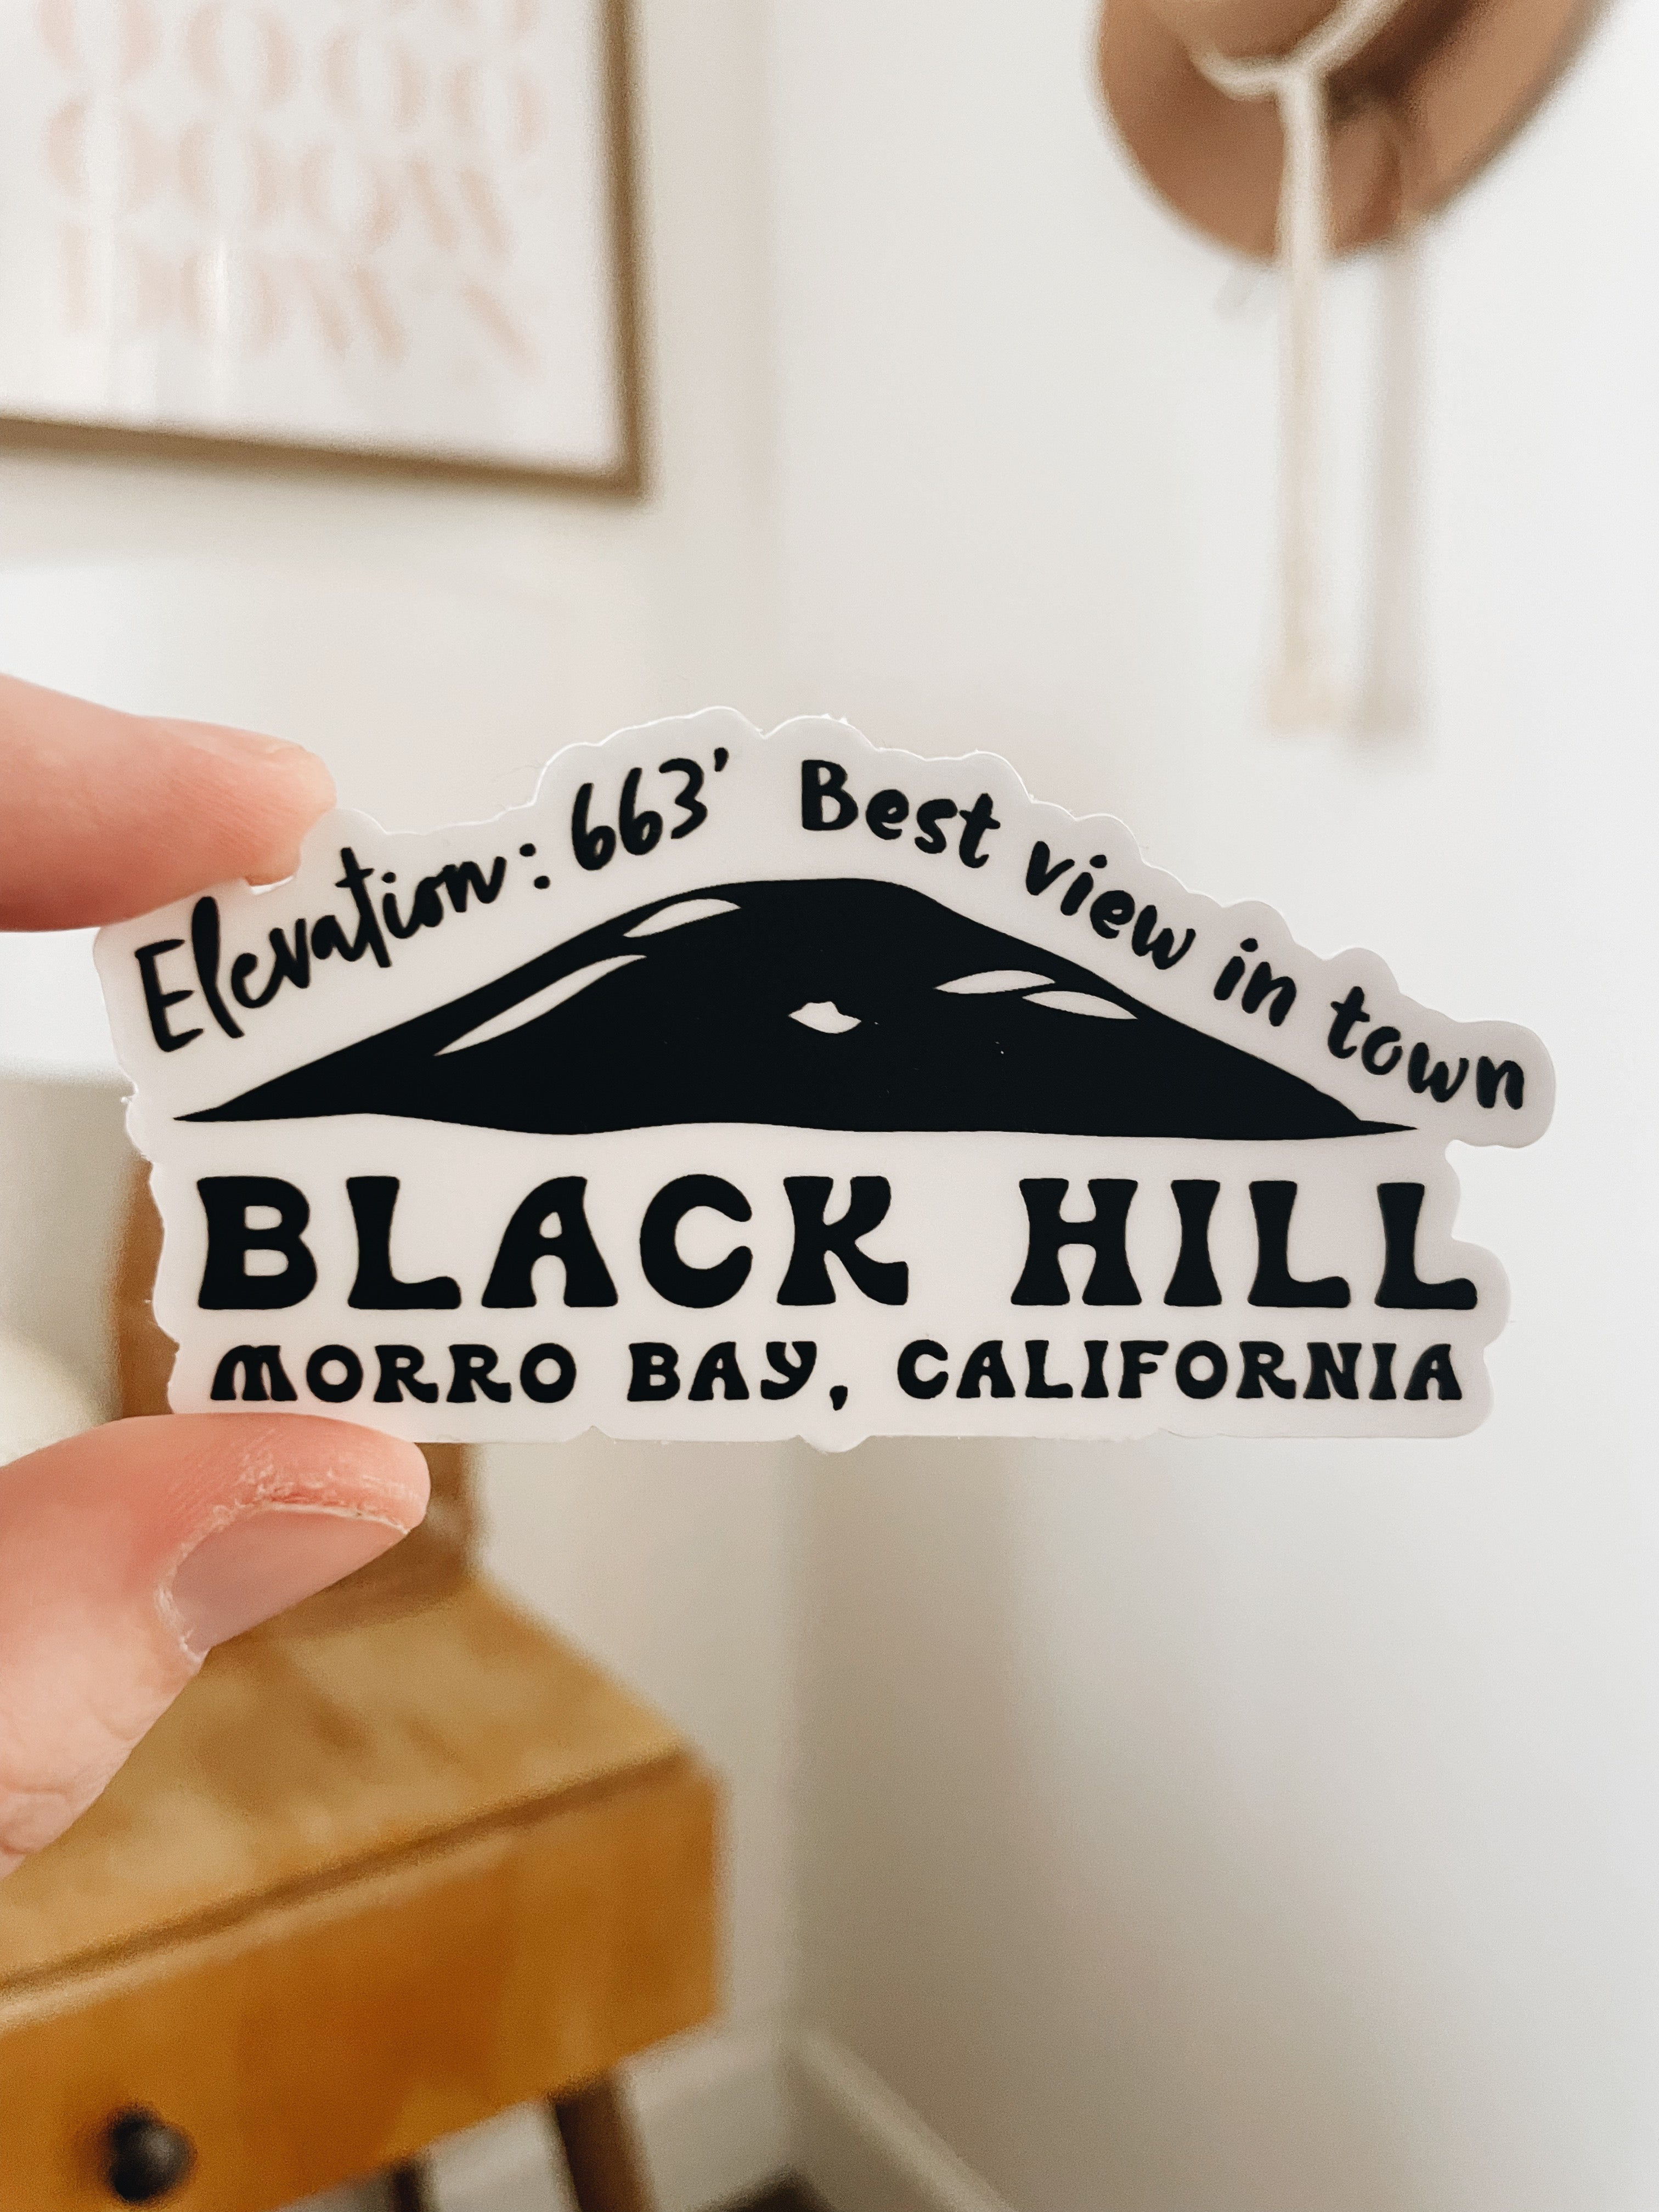 Black Hill Sticker